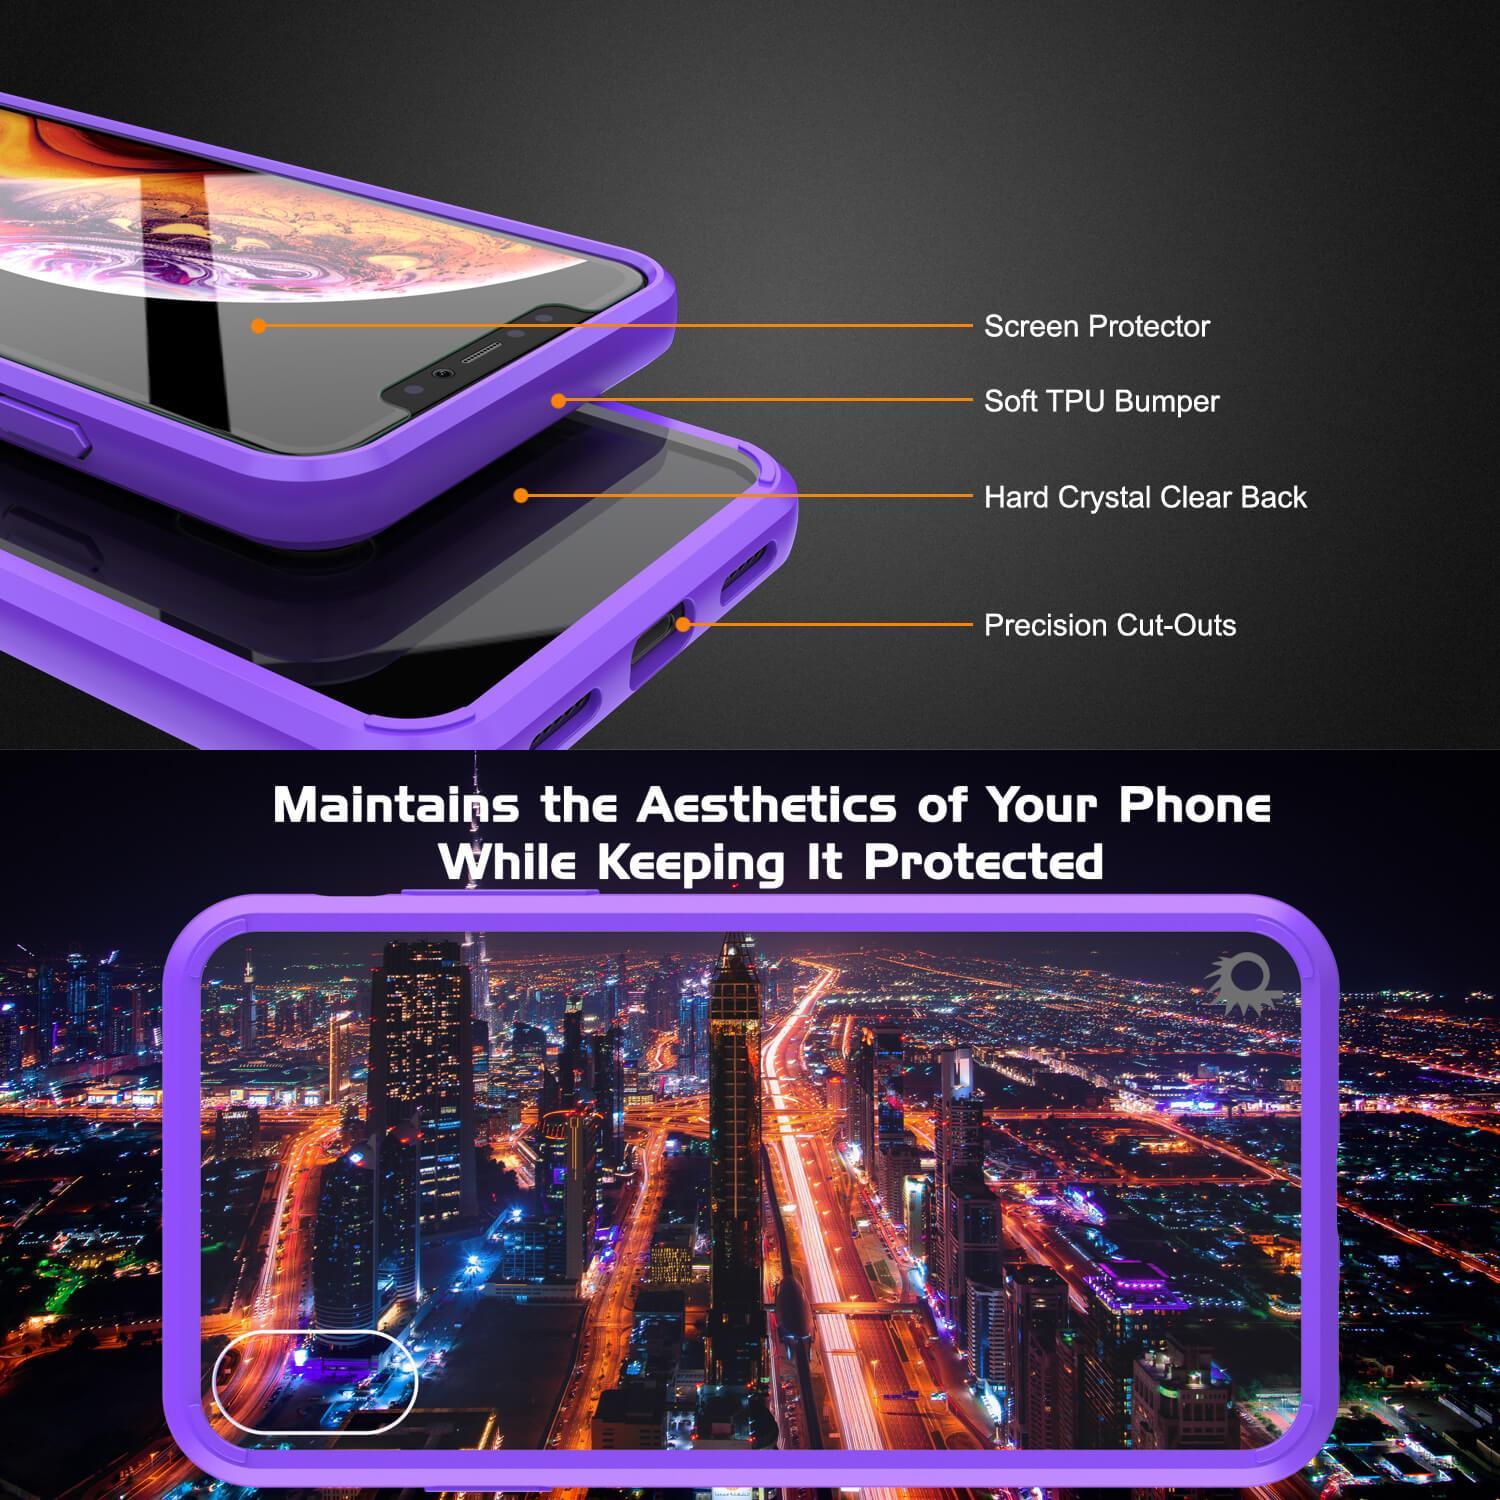 iPhone XS Case, PUNKcase [Lucid 2.0 Series] [Slim Fit] Armor Cover [Purple]